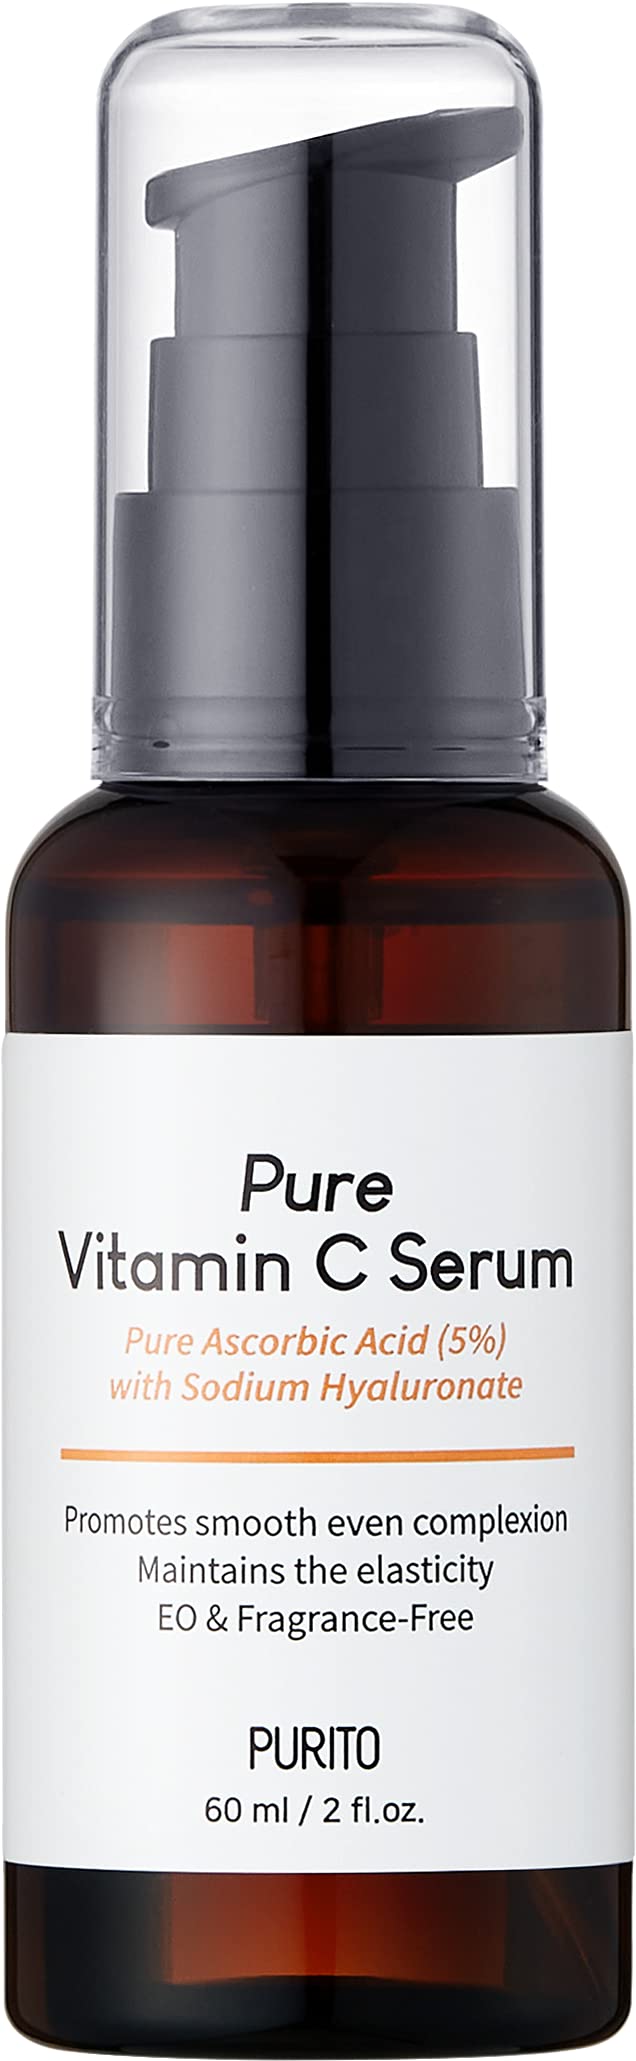 [Australia] - PURITO Pure Vitamin C Serum 60ml 2.0 fl.oz, Natural Ingredients Serum, Vitamin C, Vegan & Cruelty Free, Hypoallergenic, Calming, Fragrance-free (Pack of 1), PPVCS 